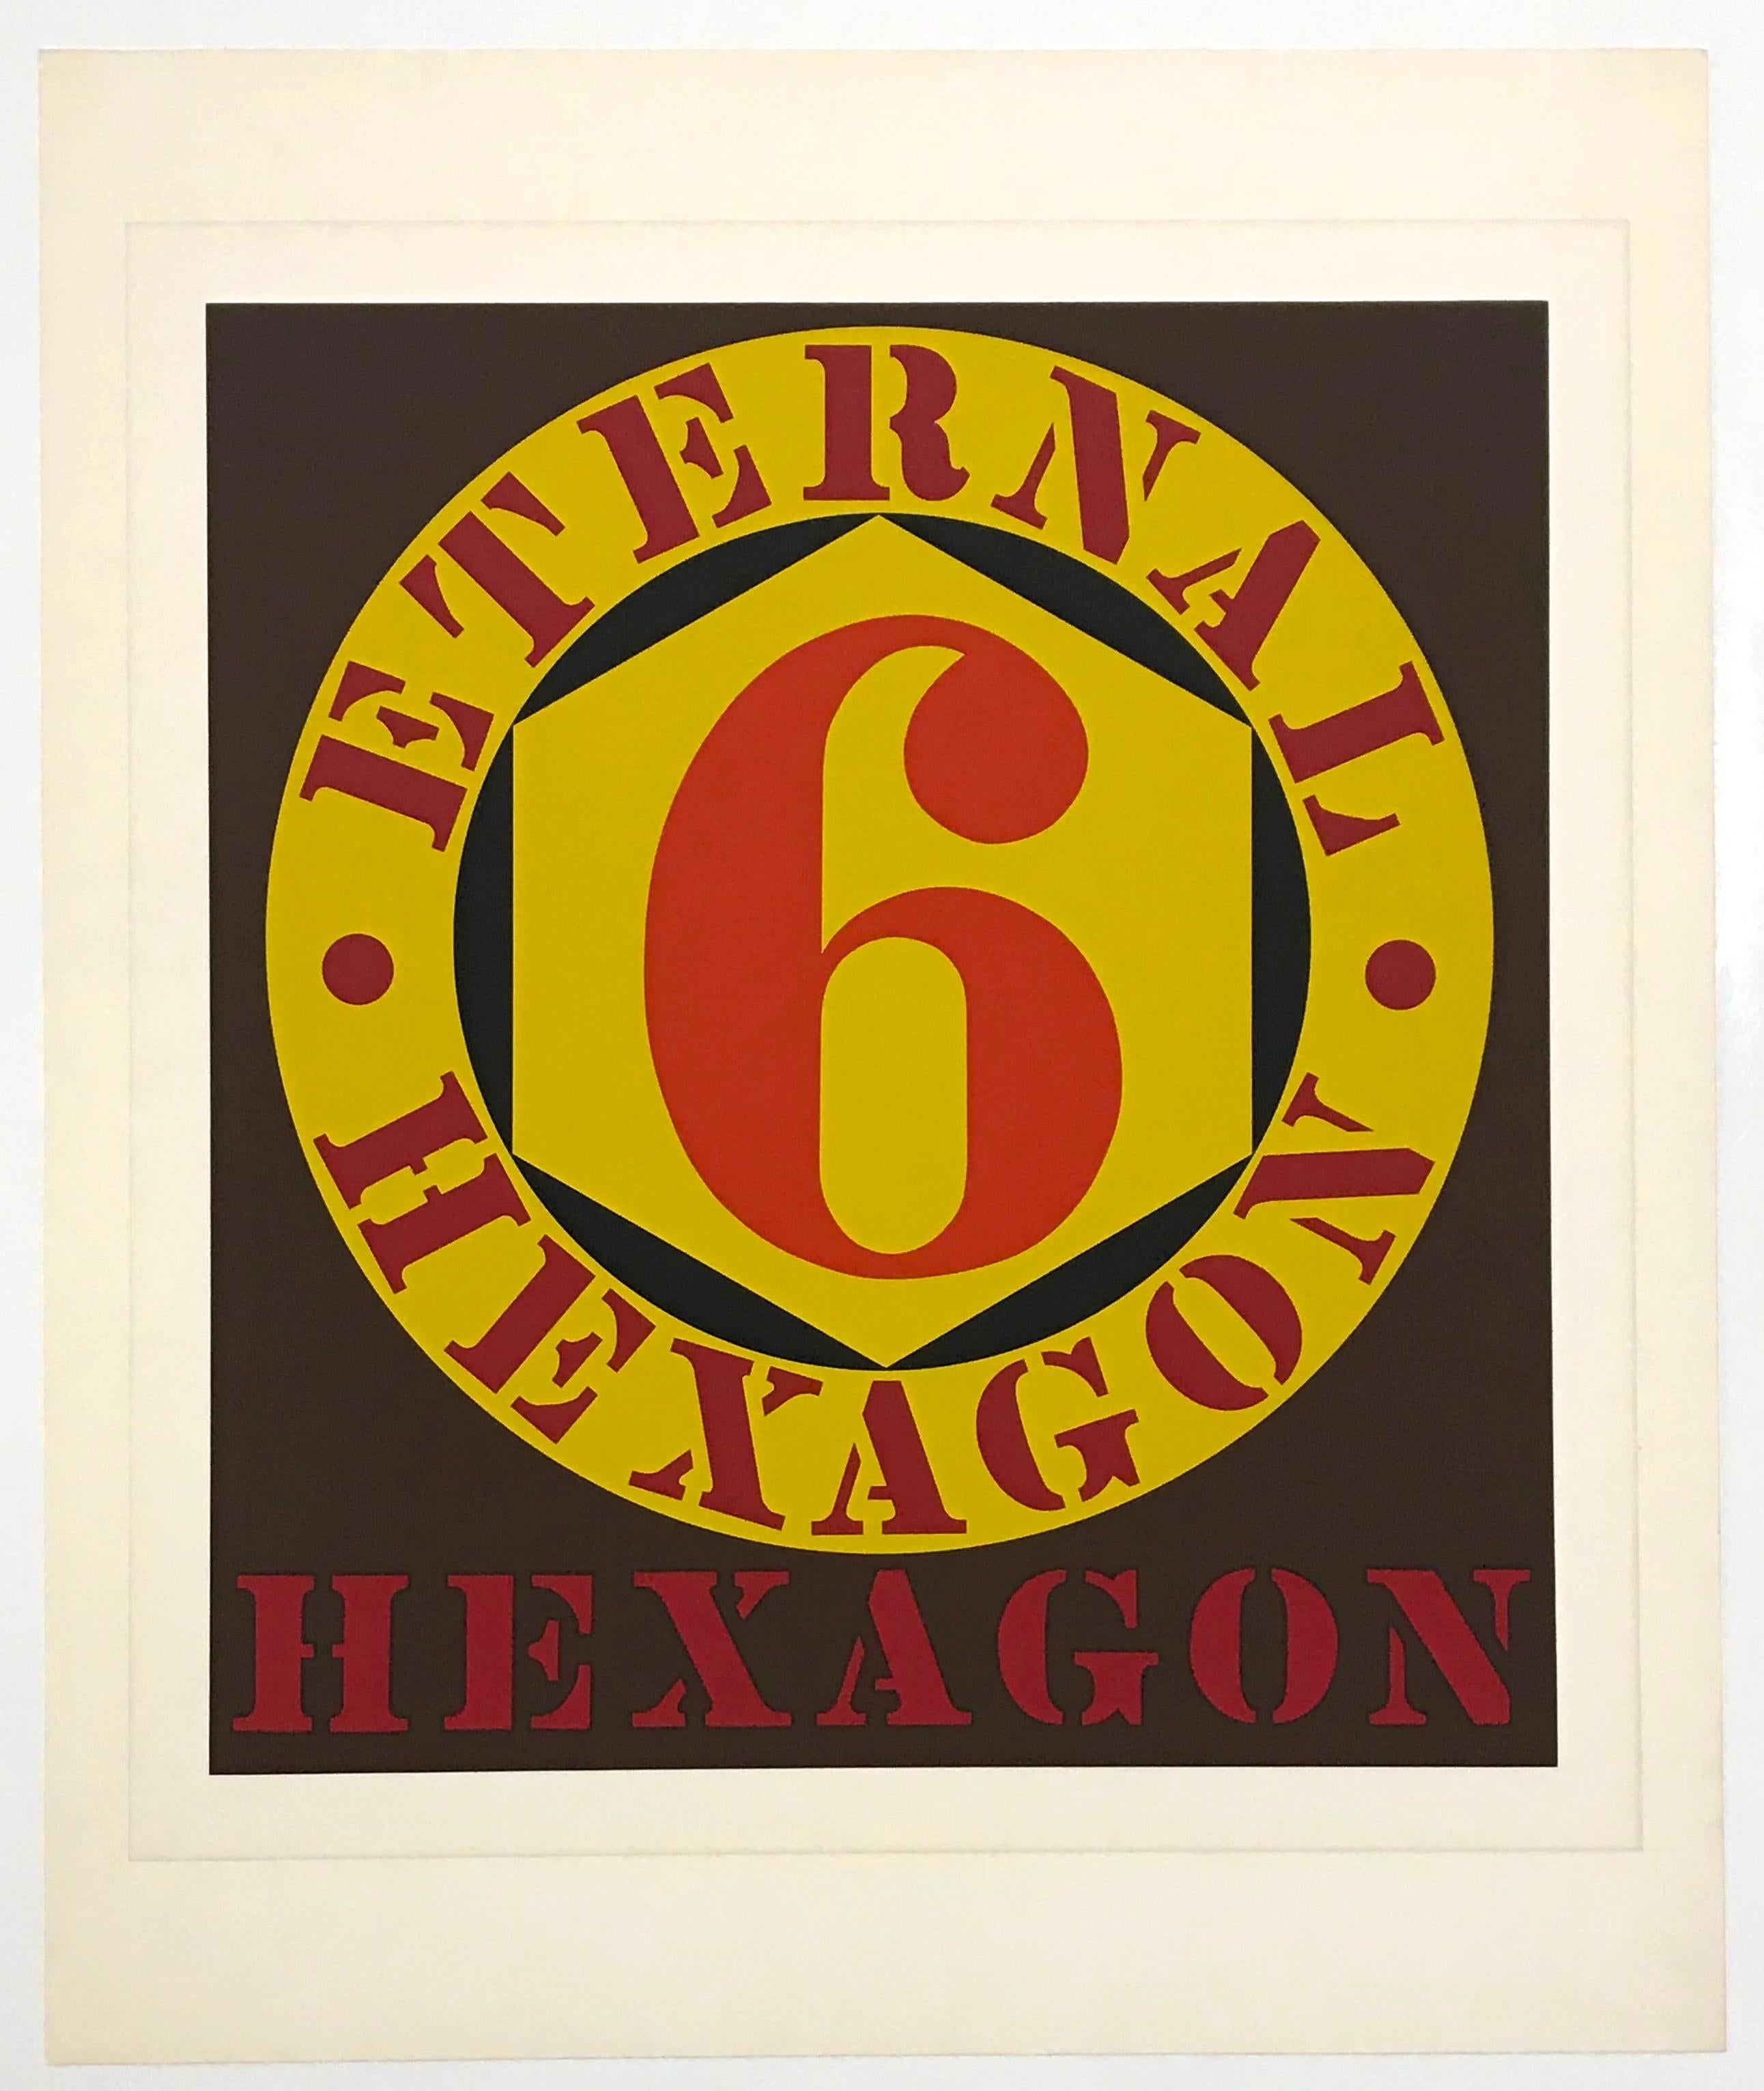 Robert Indiana Abstract Print - "Eternal Hexagon" original serigraph